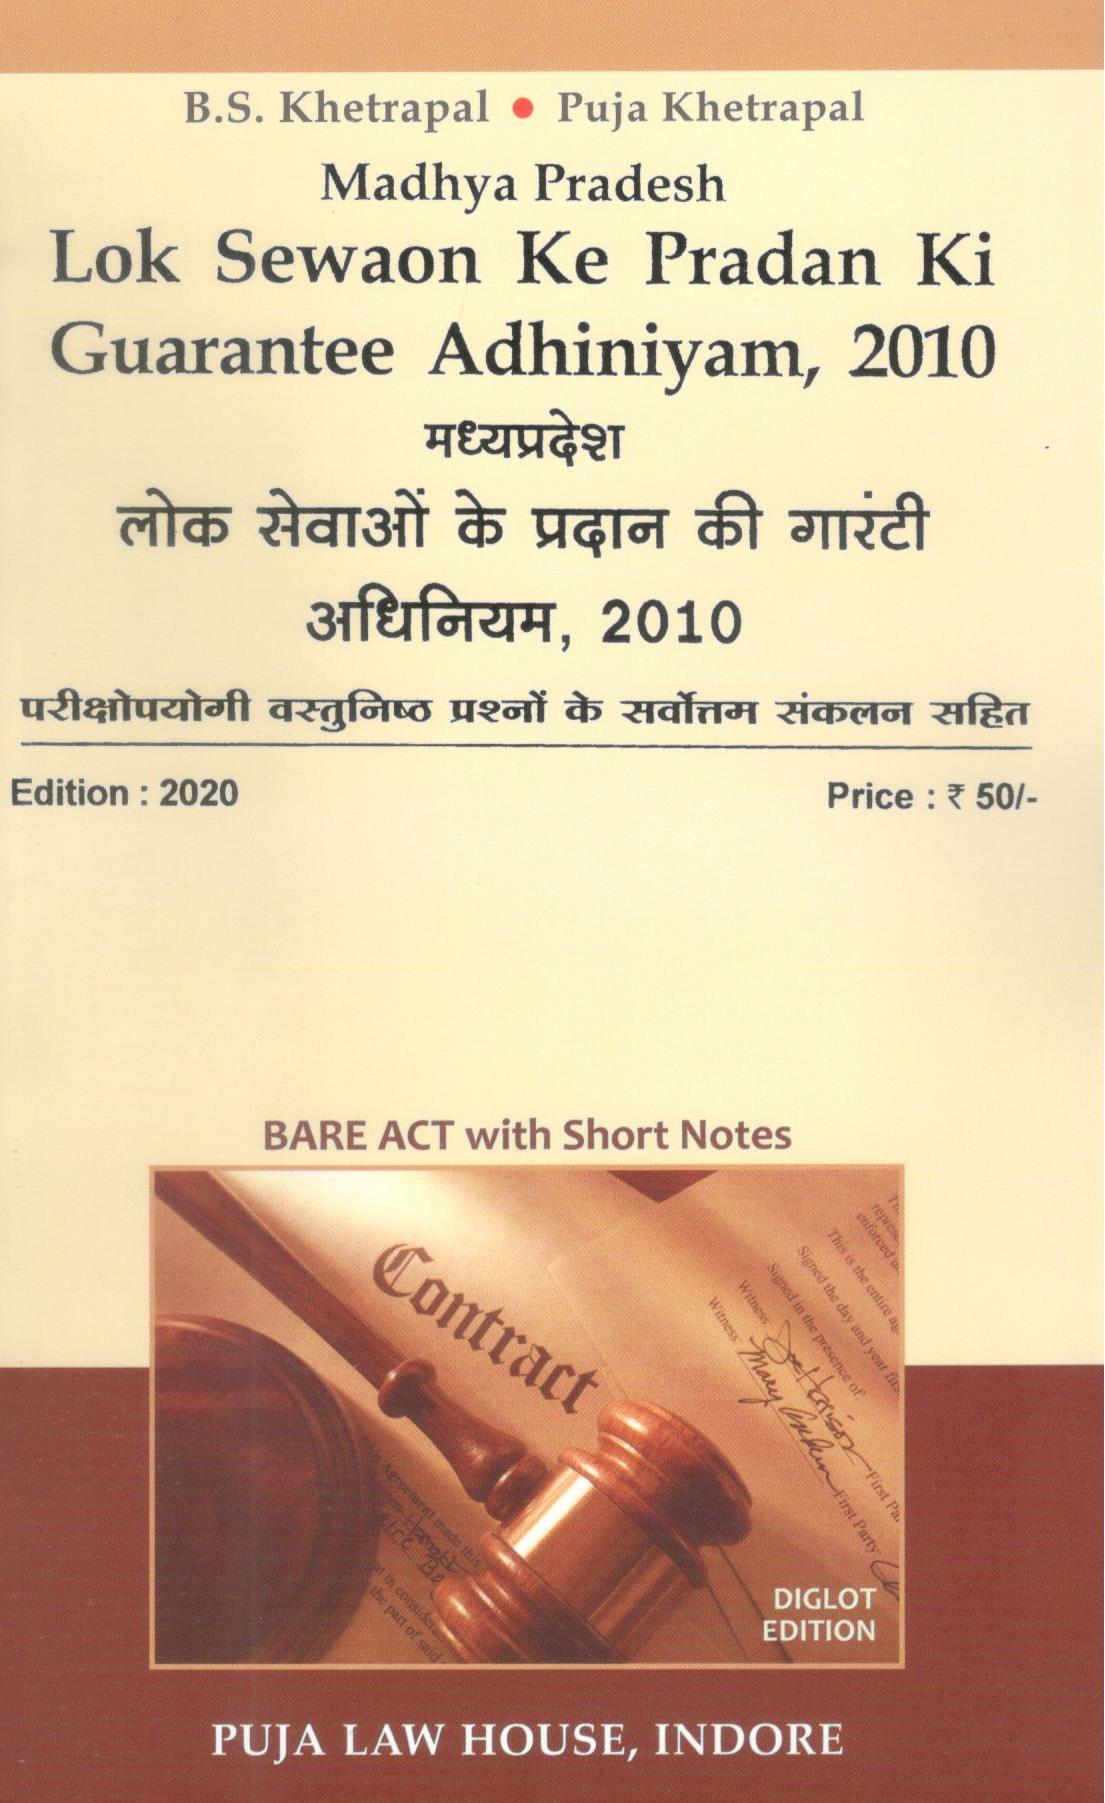 मध्य प्रदेश लोक सेवाओ के प्रदान की गारंटी अधिनियम, 2010 / Madhya Pradesh Lok Sewaon ke Pradan ki Guarantee Adhiniyam, 2010